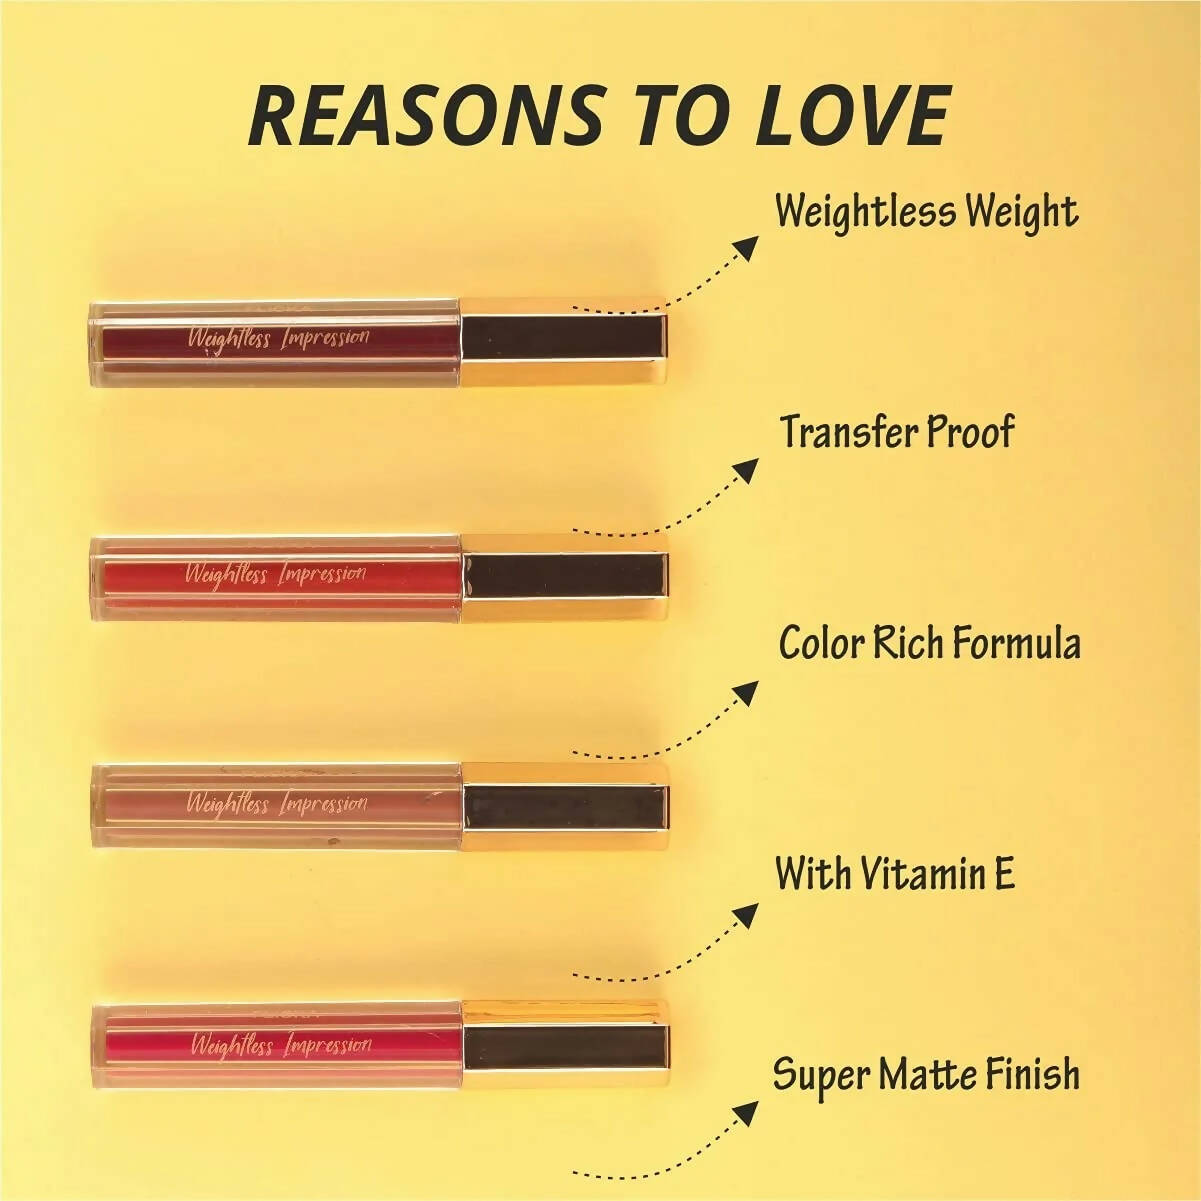 FLiCKA Weightless Impression 02 February - Red Matte Finish Liquid Lipstick